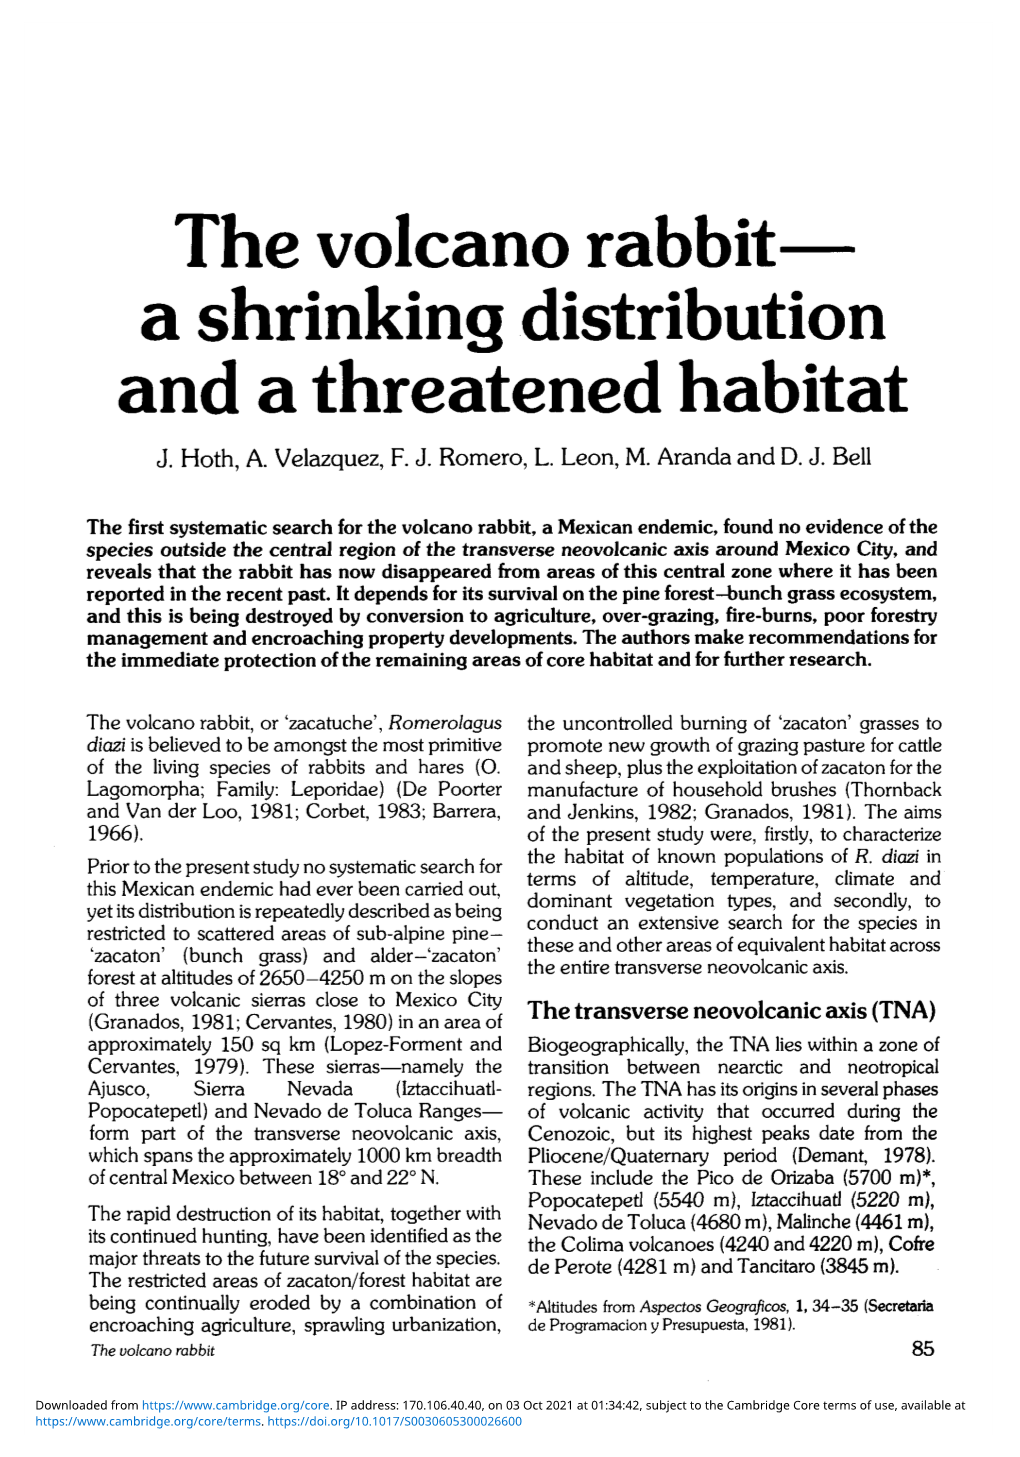 The Volcano Rabbit—A Shrinking Distribution and a Threatened Habitat